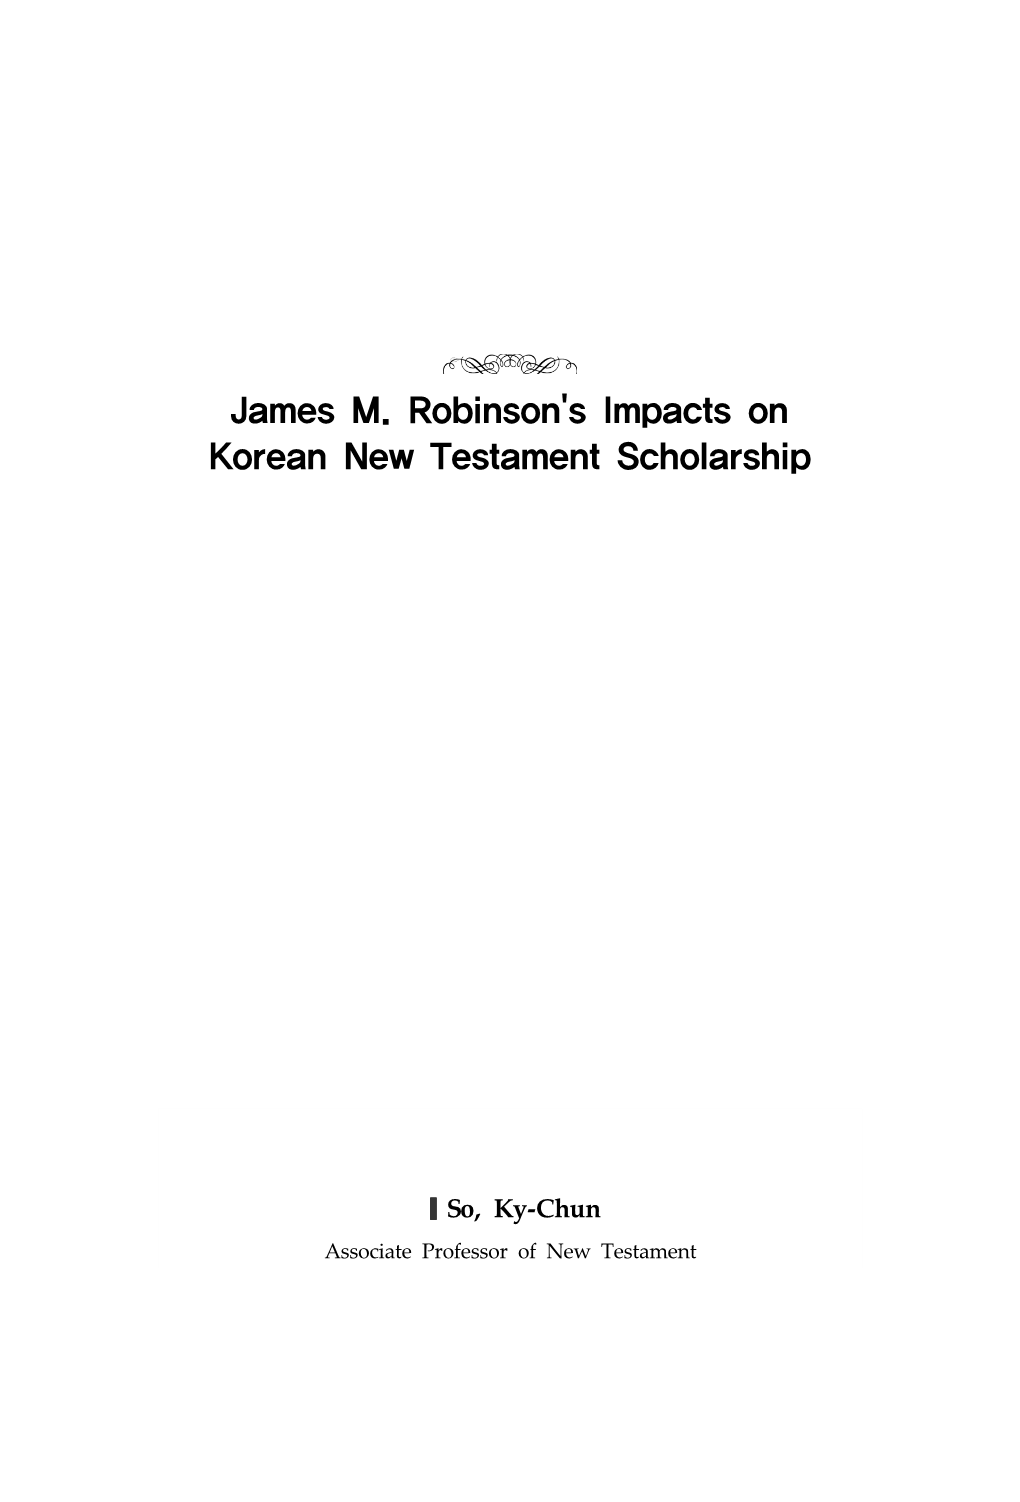 James M. Robinson's Impacts on Korean New Testament Scholarship